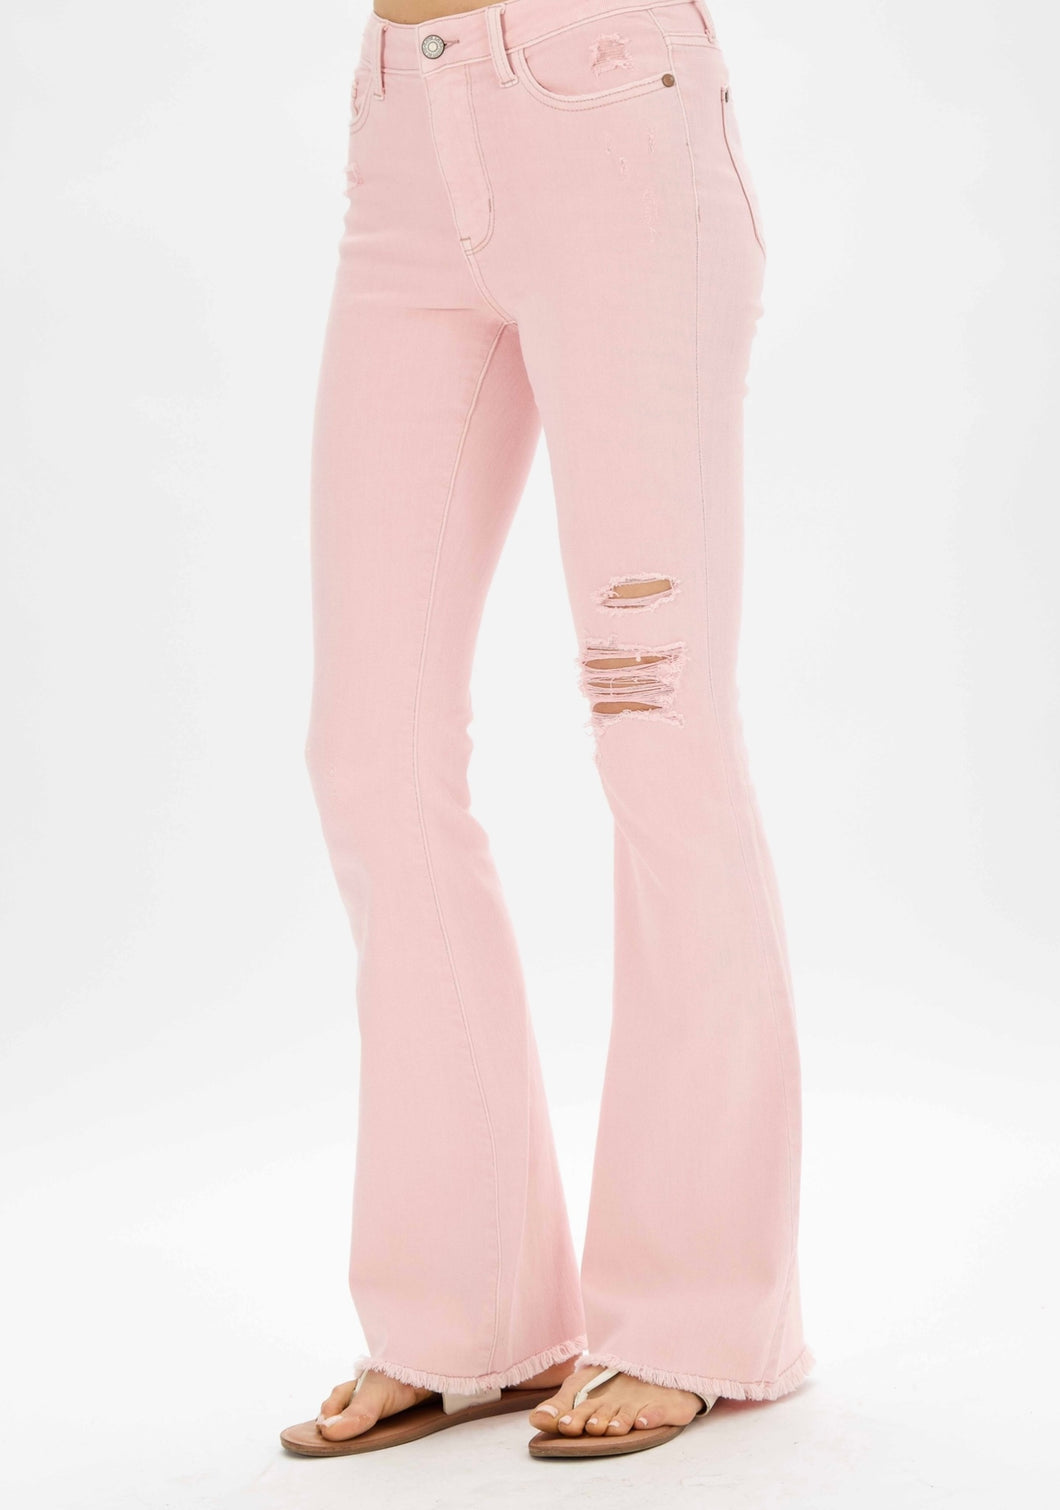 Judy Blue Pastel Pink Distressed Flare Jean